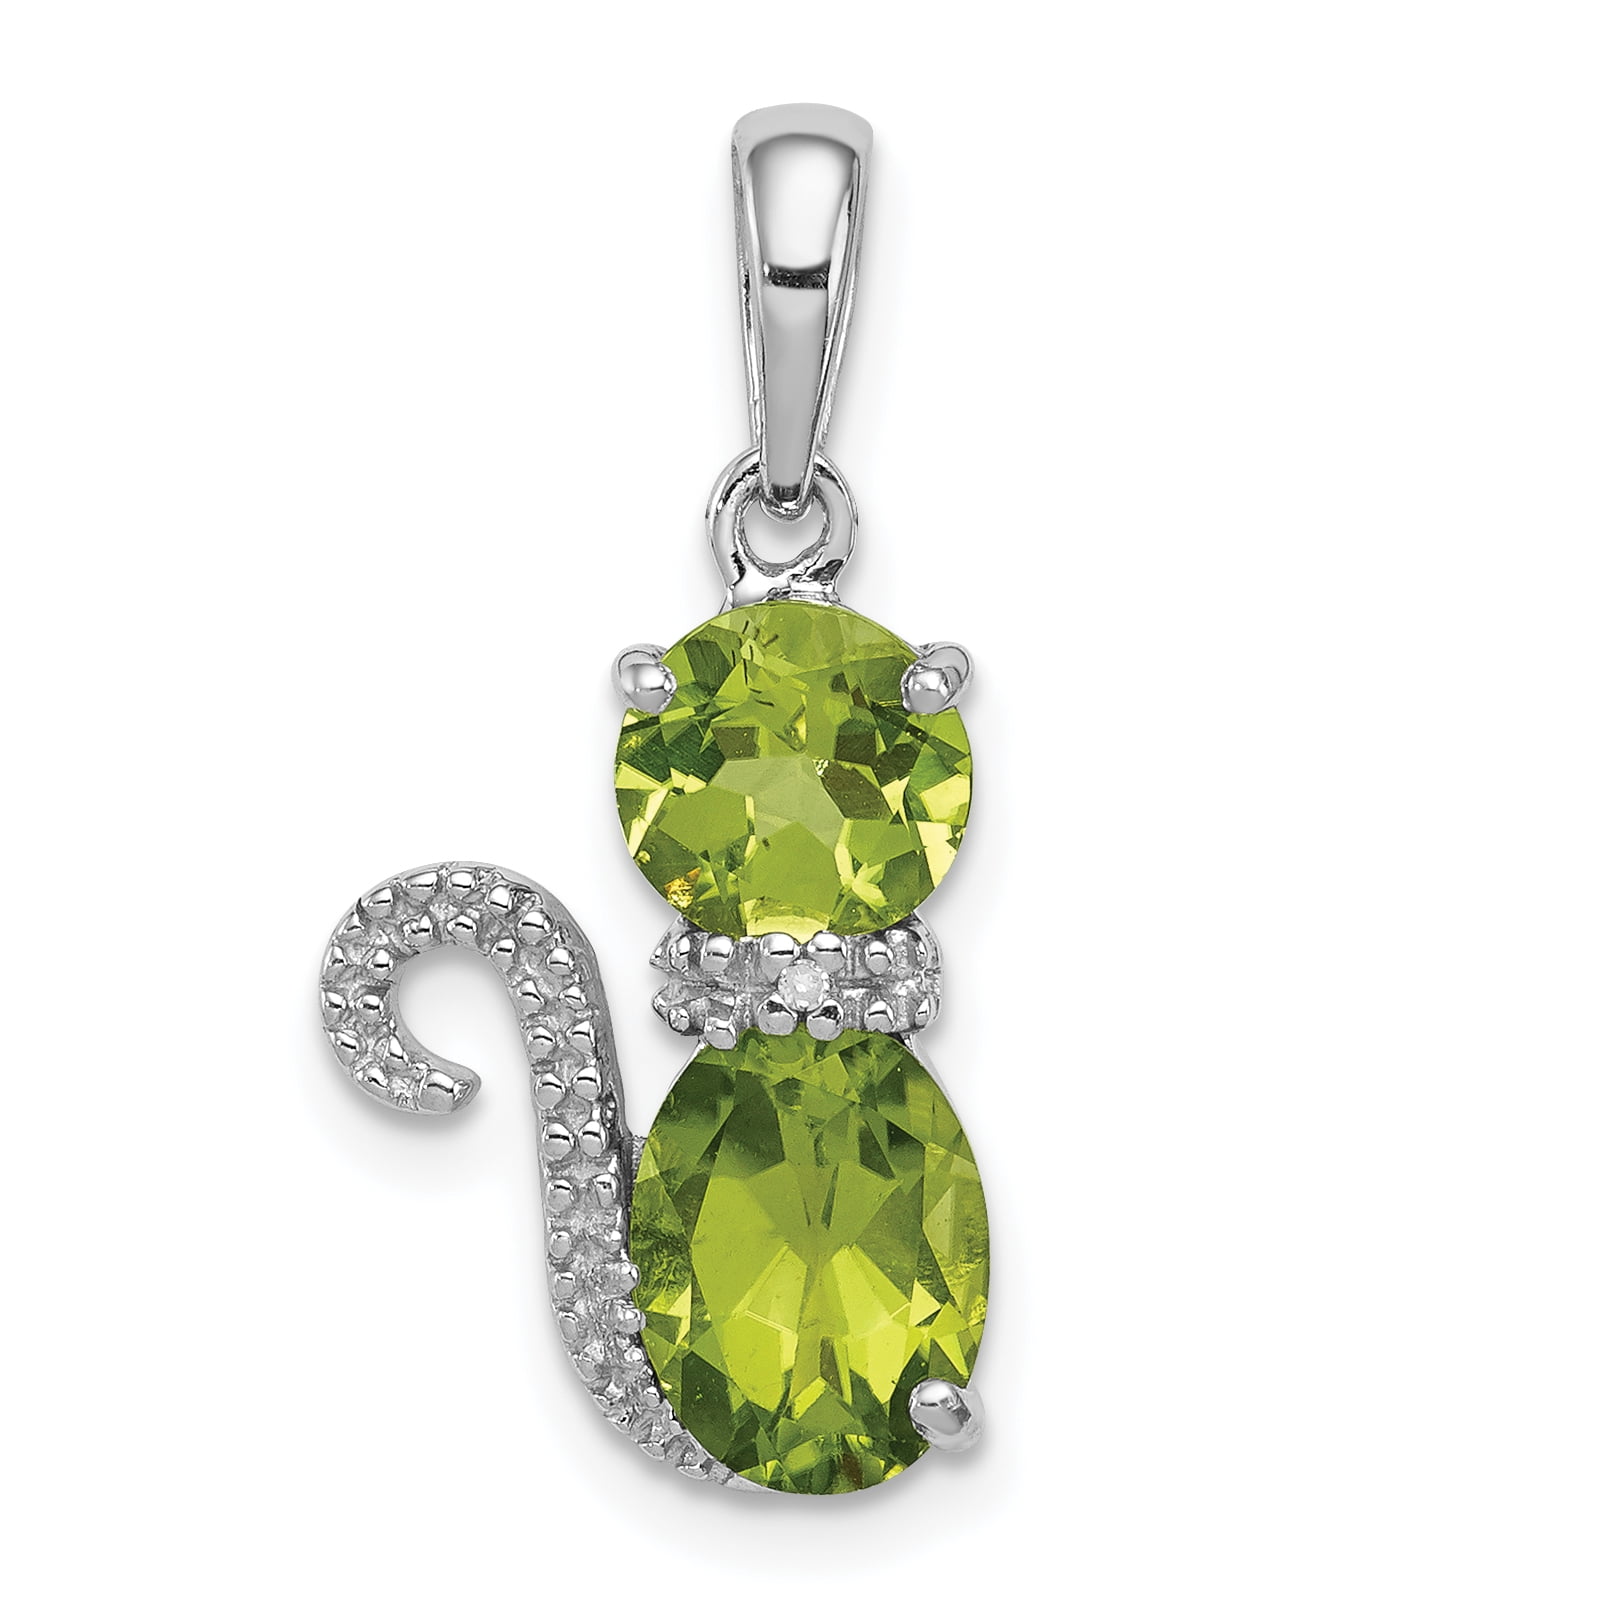 wonderful pendant for women,silver chain Natural peridot pendant 925 sterling silver fashion jewelry pendant jewelry pendant for gift